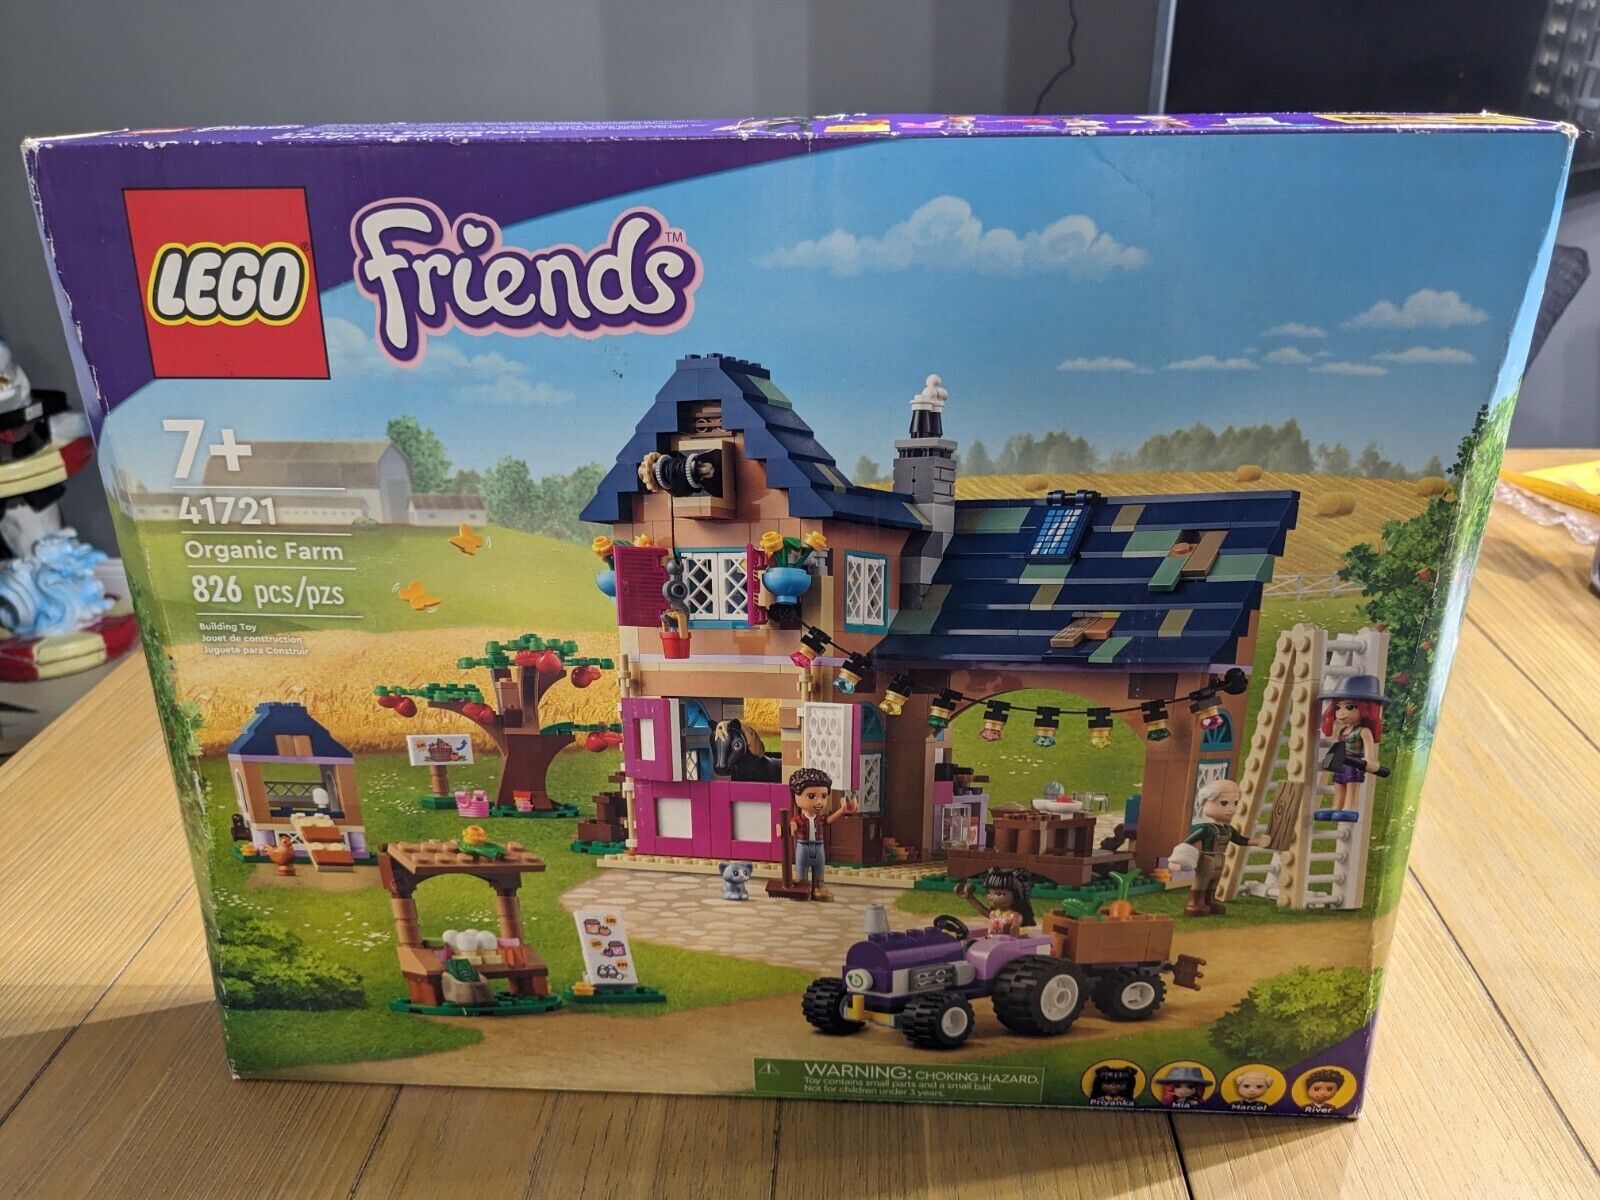 LEGO 41721 Friends Orangic Farm New/Sealed/Discontinued - Box Creases